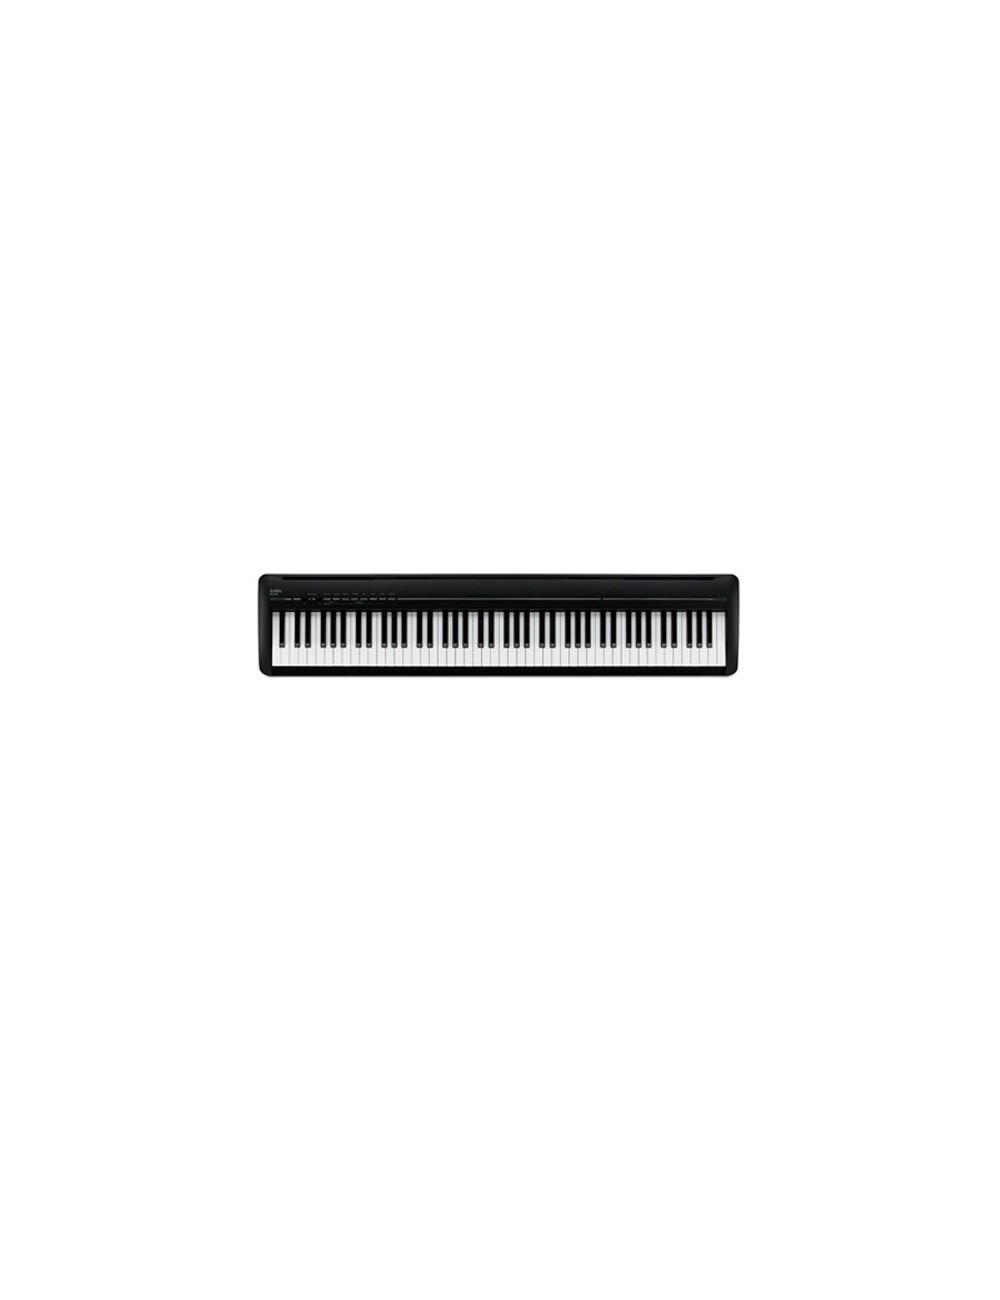 Piano KAWAI ES 120